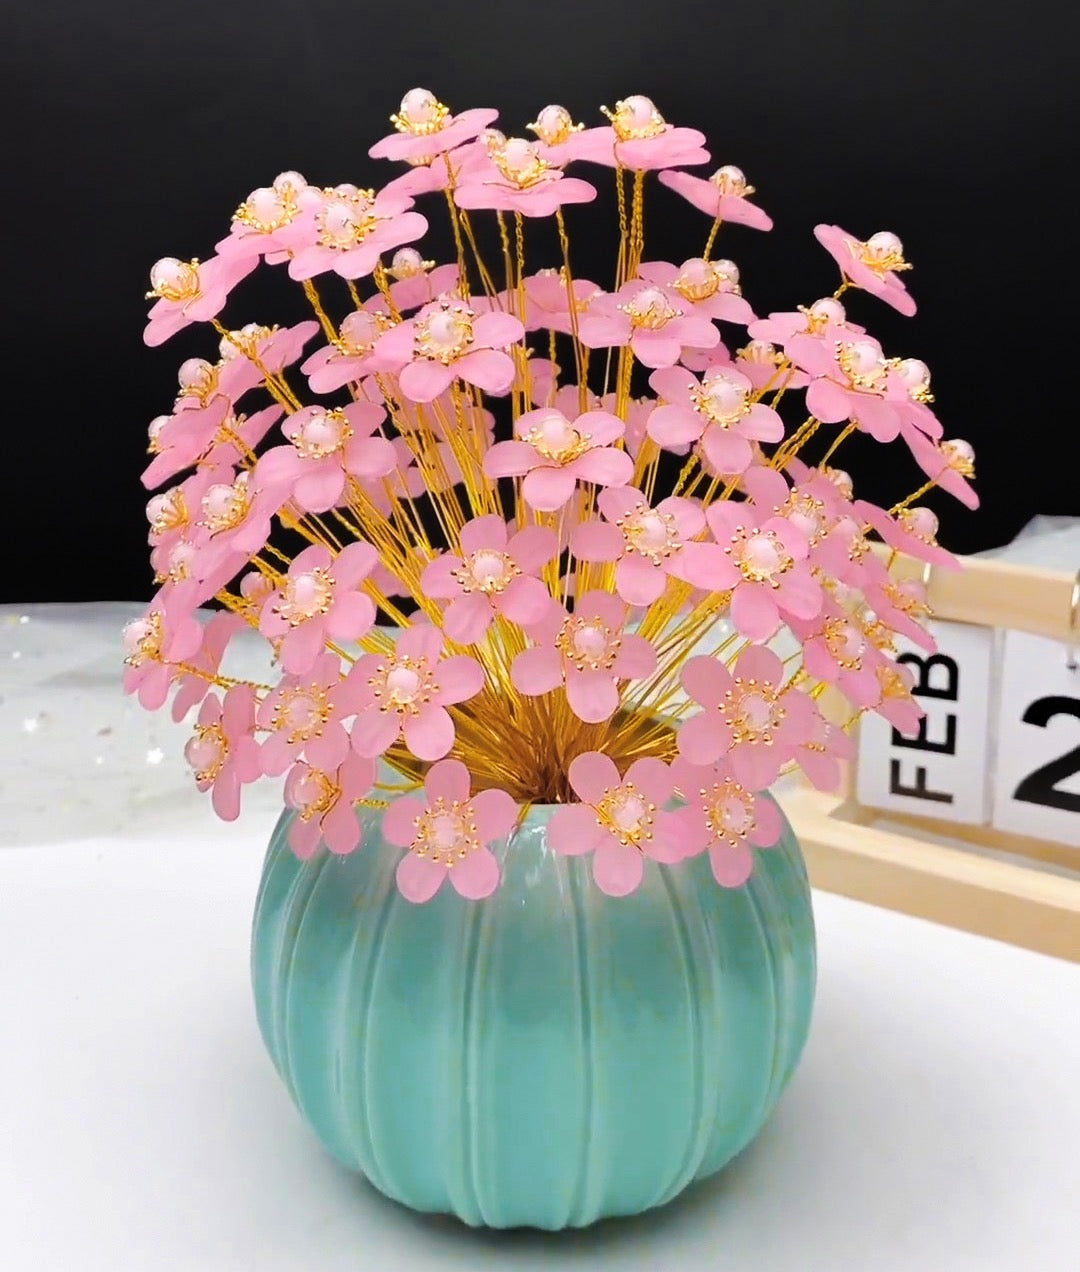 Handmade diy four season beads flowers for home craft decorations ideas